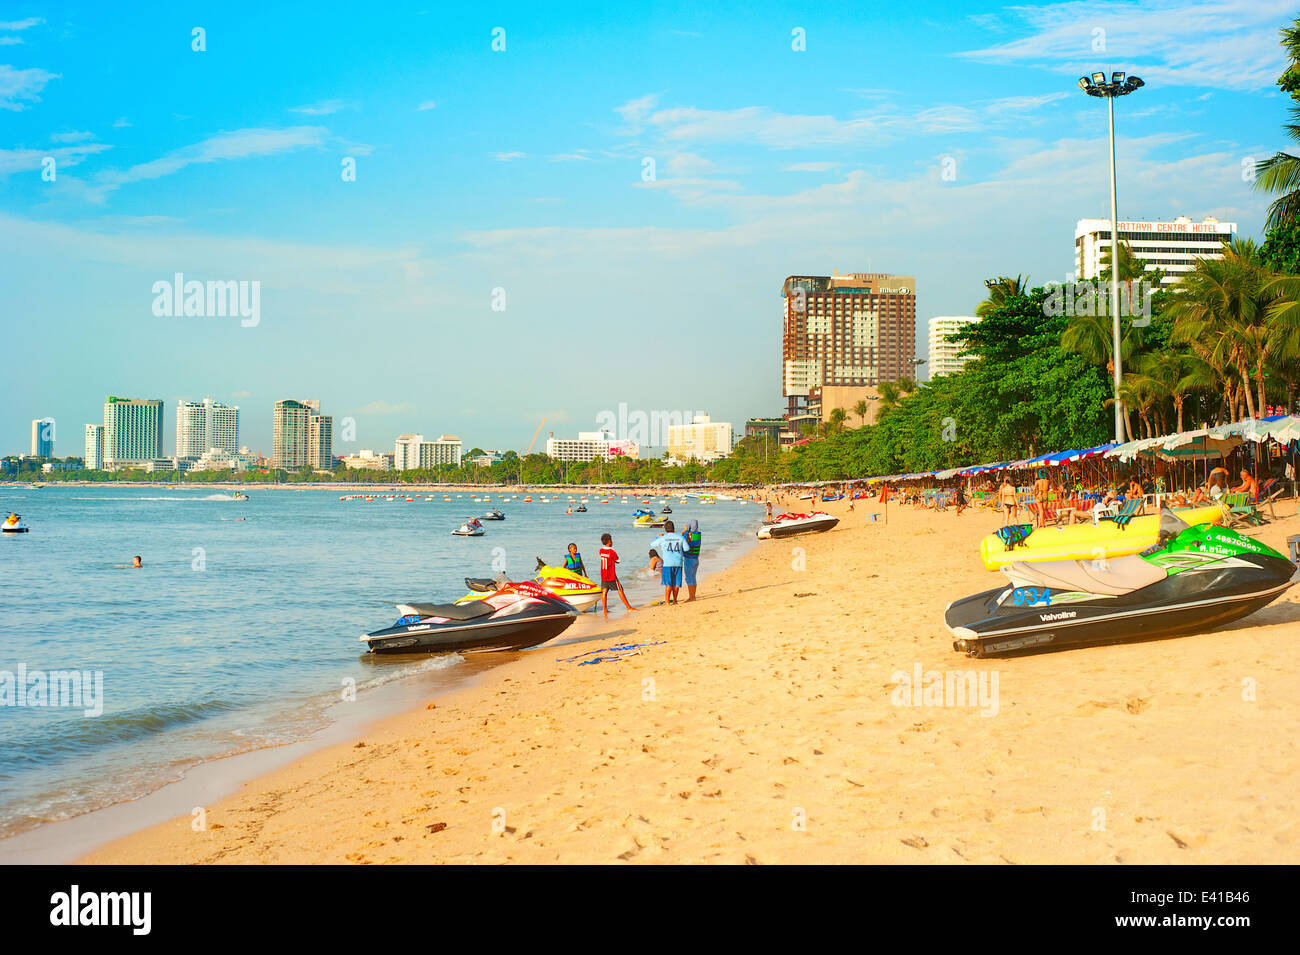 People walking along the beach in Pattaya, Thailand. Stock Photo